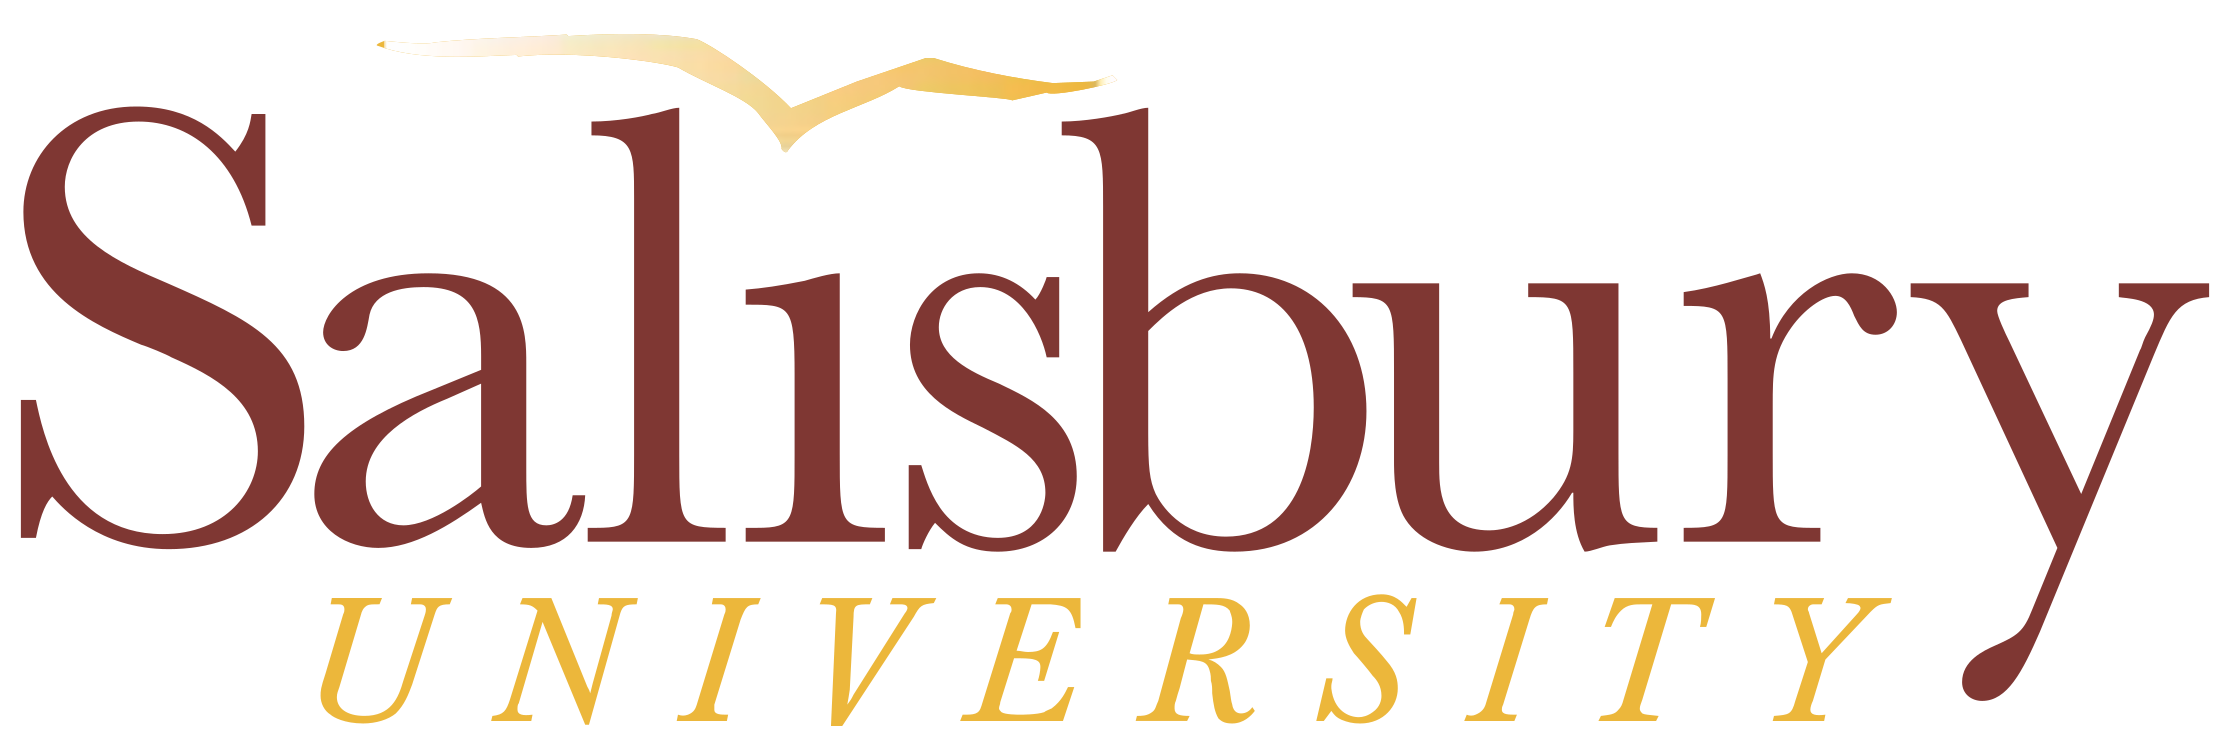 salisbury-university-logo-png-transparent